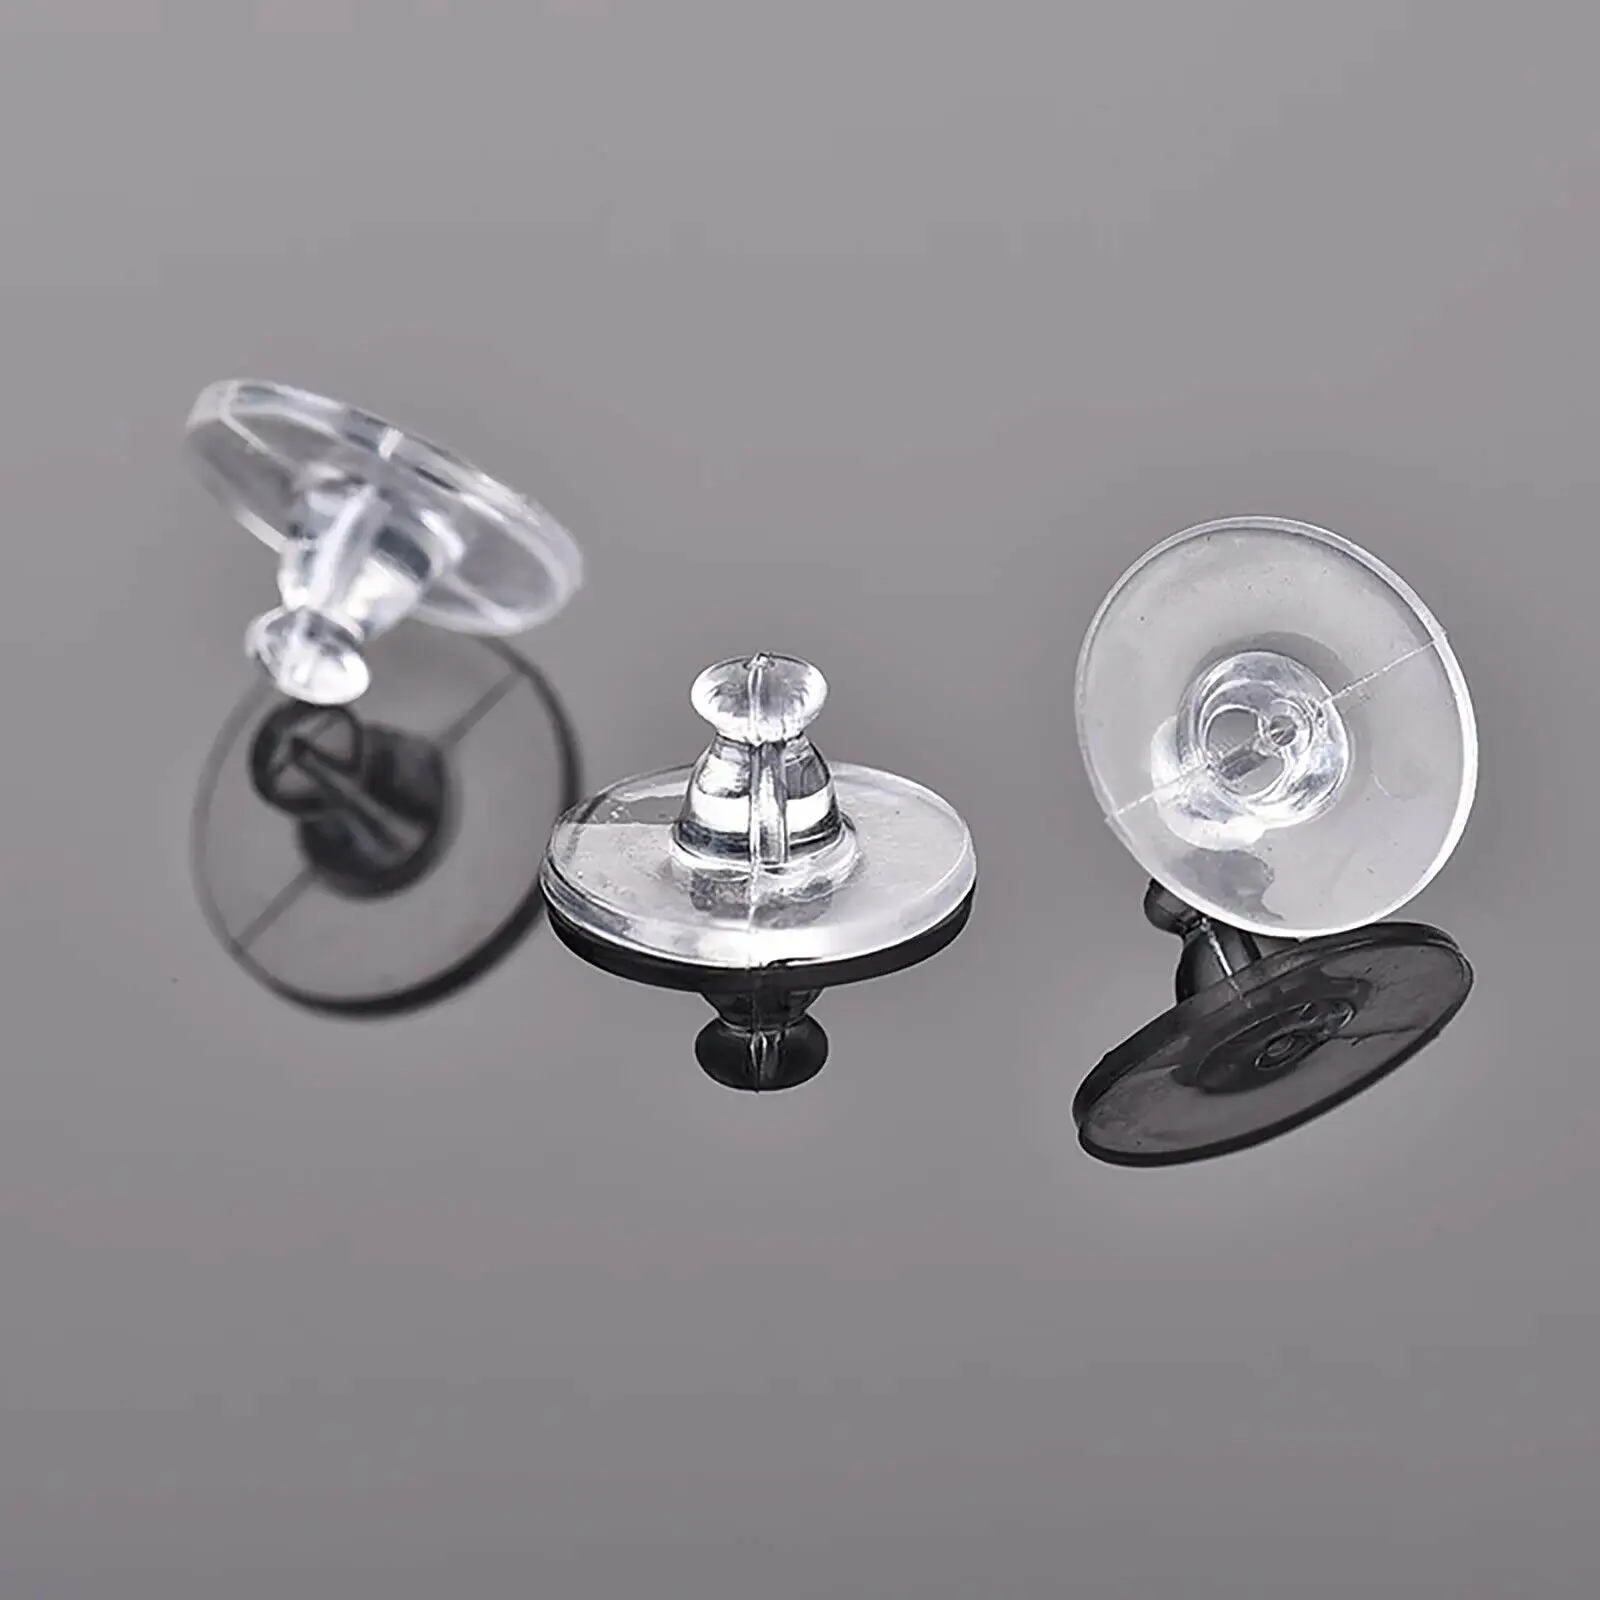 

Large Plastic Rubber Disc Earring Backs To Secure Heavy Stud Post Style Earrings